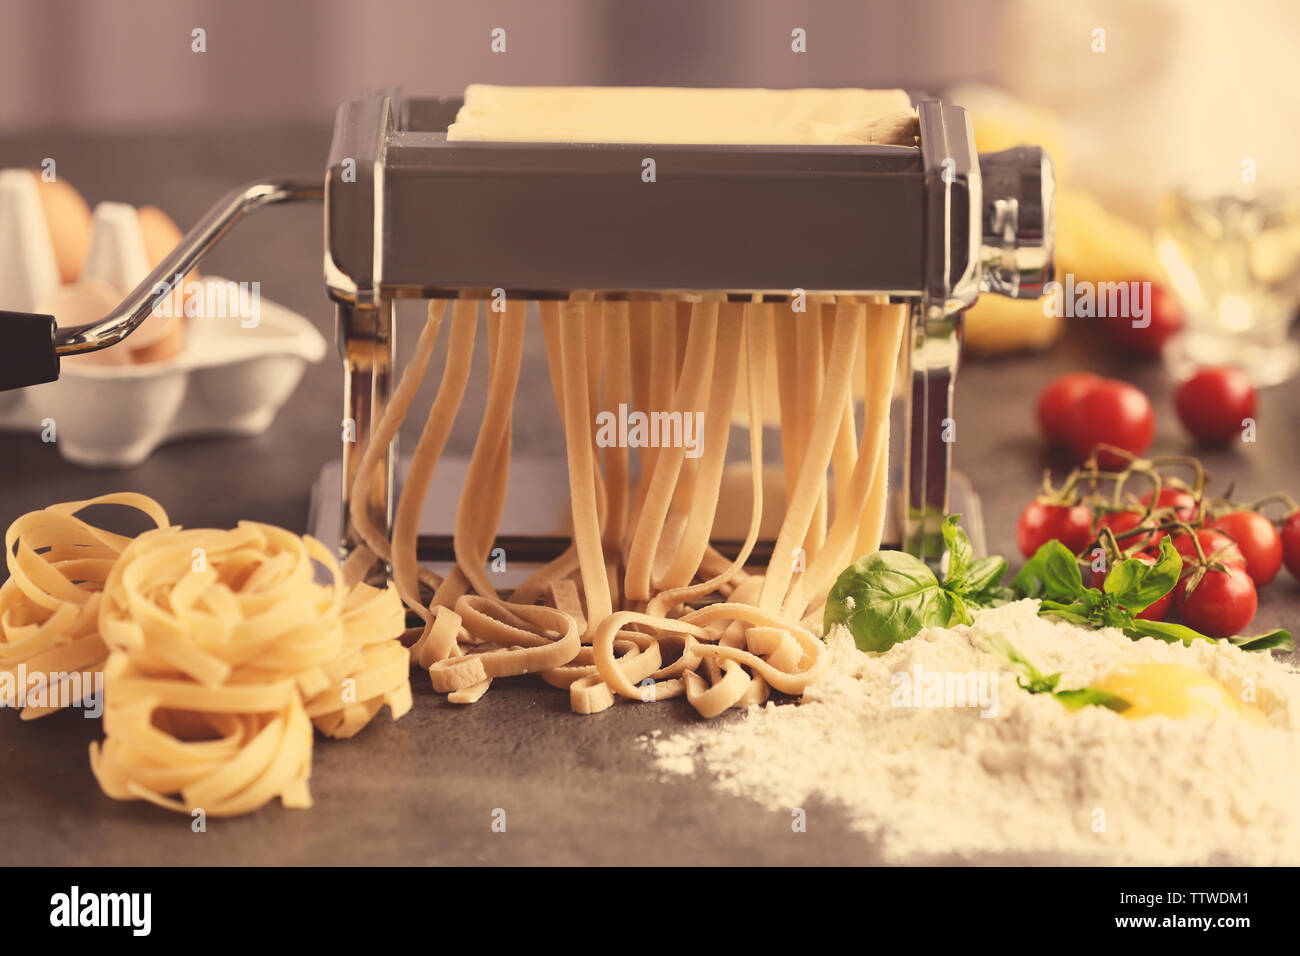 https://c8.alamy.com/comp/TTWDM1/making-tagliatelle-with-pasta-machine-on-kitchen-table-TTWDM1.jpg